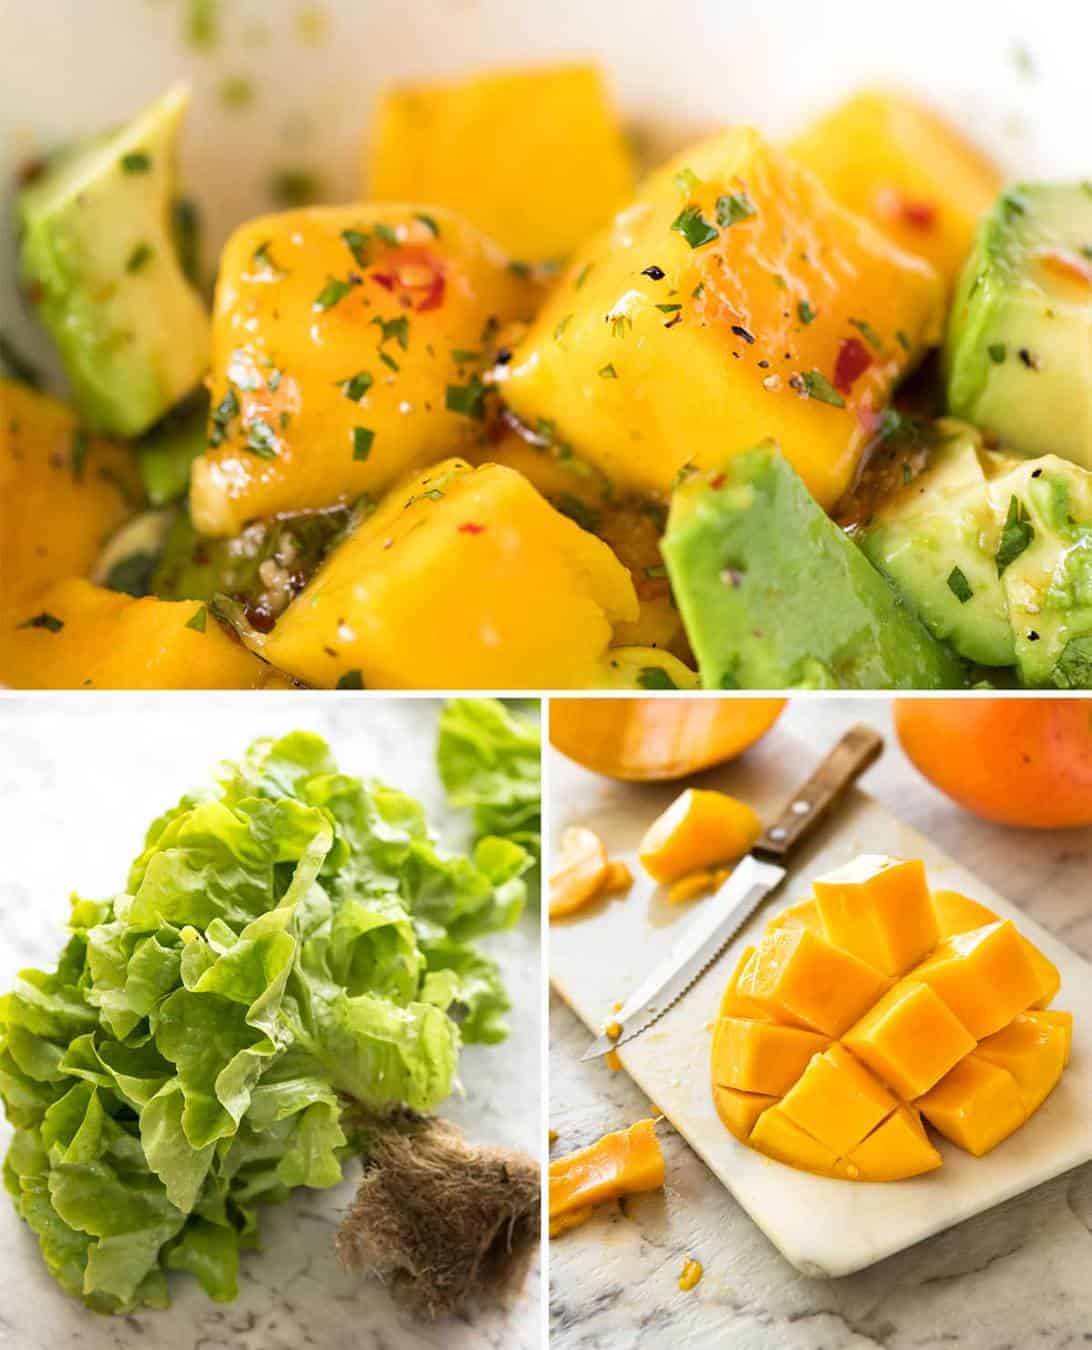 Avocado and Mango Salad www.recipetineats.com